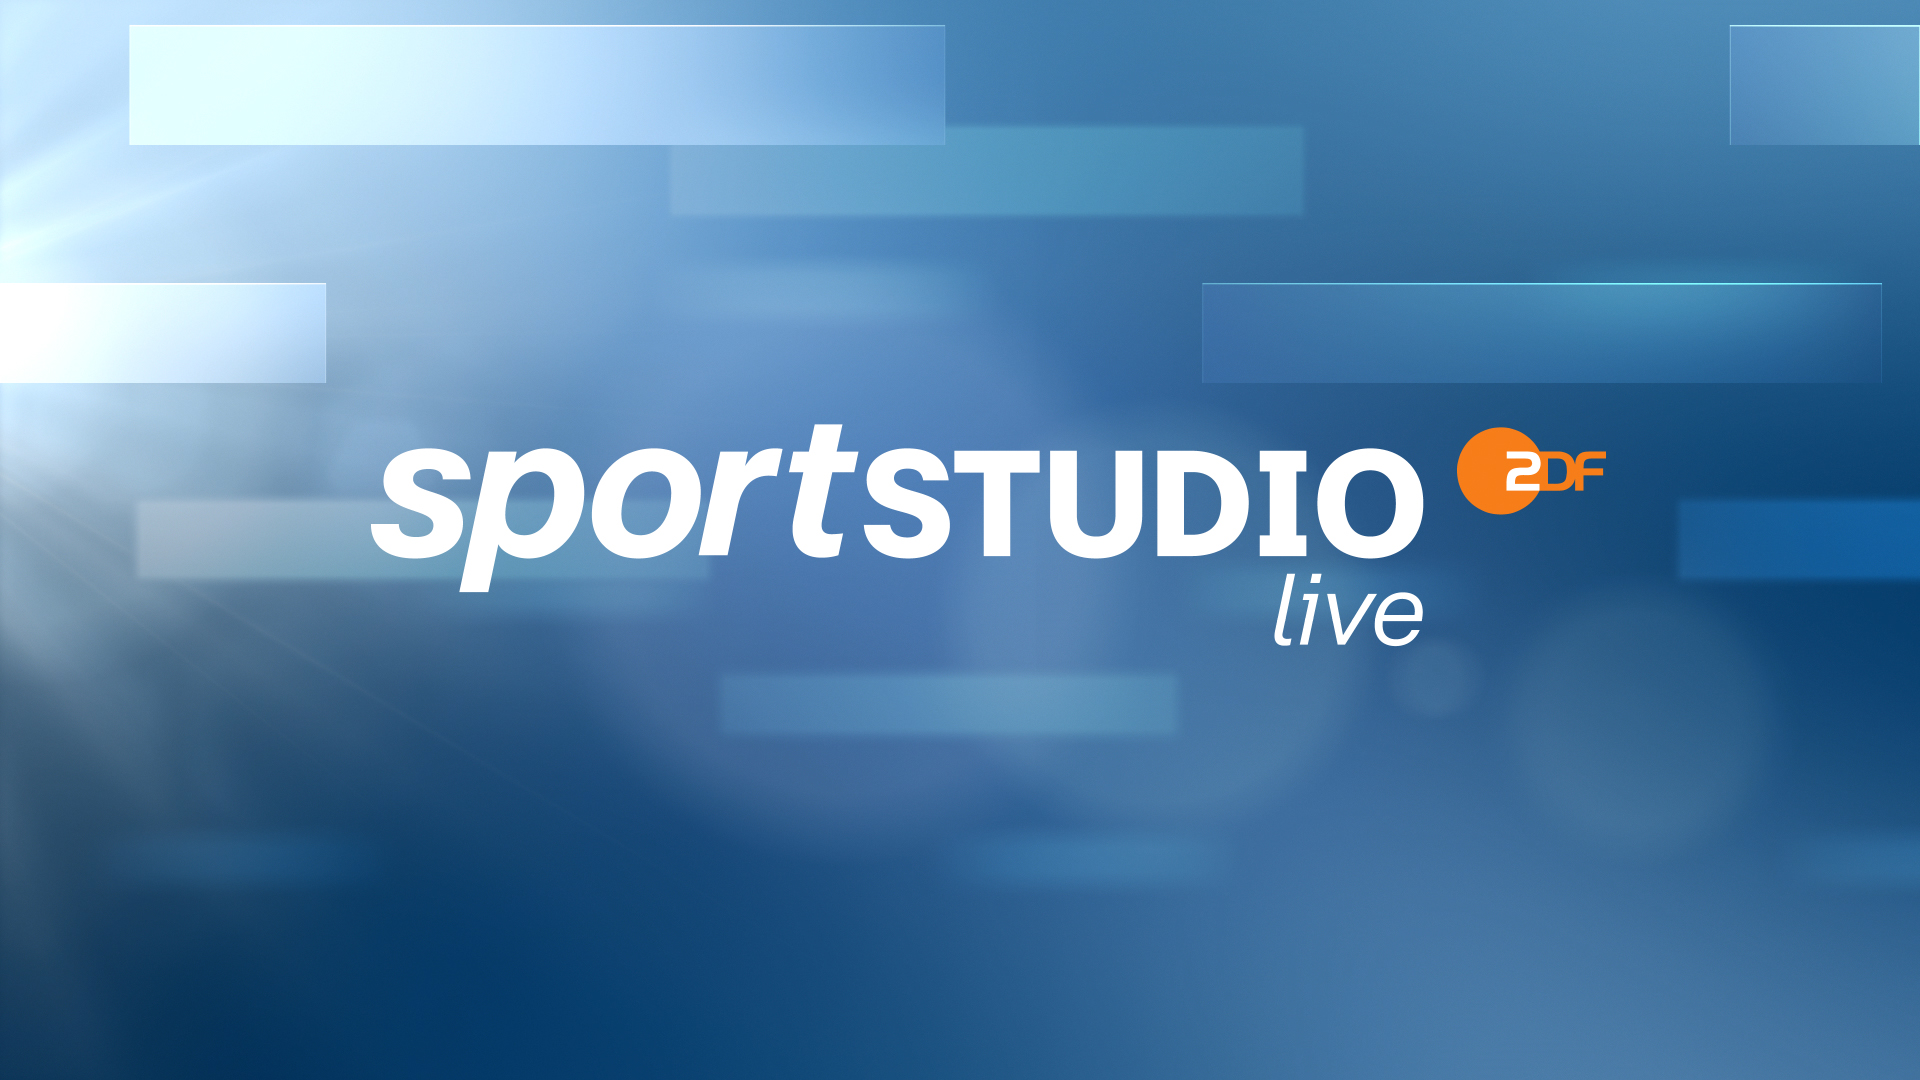 sportstudio live im ZDF Tennis, Leichtathletik, Fußball / Zudem Special Olympics ..